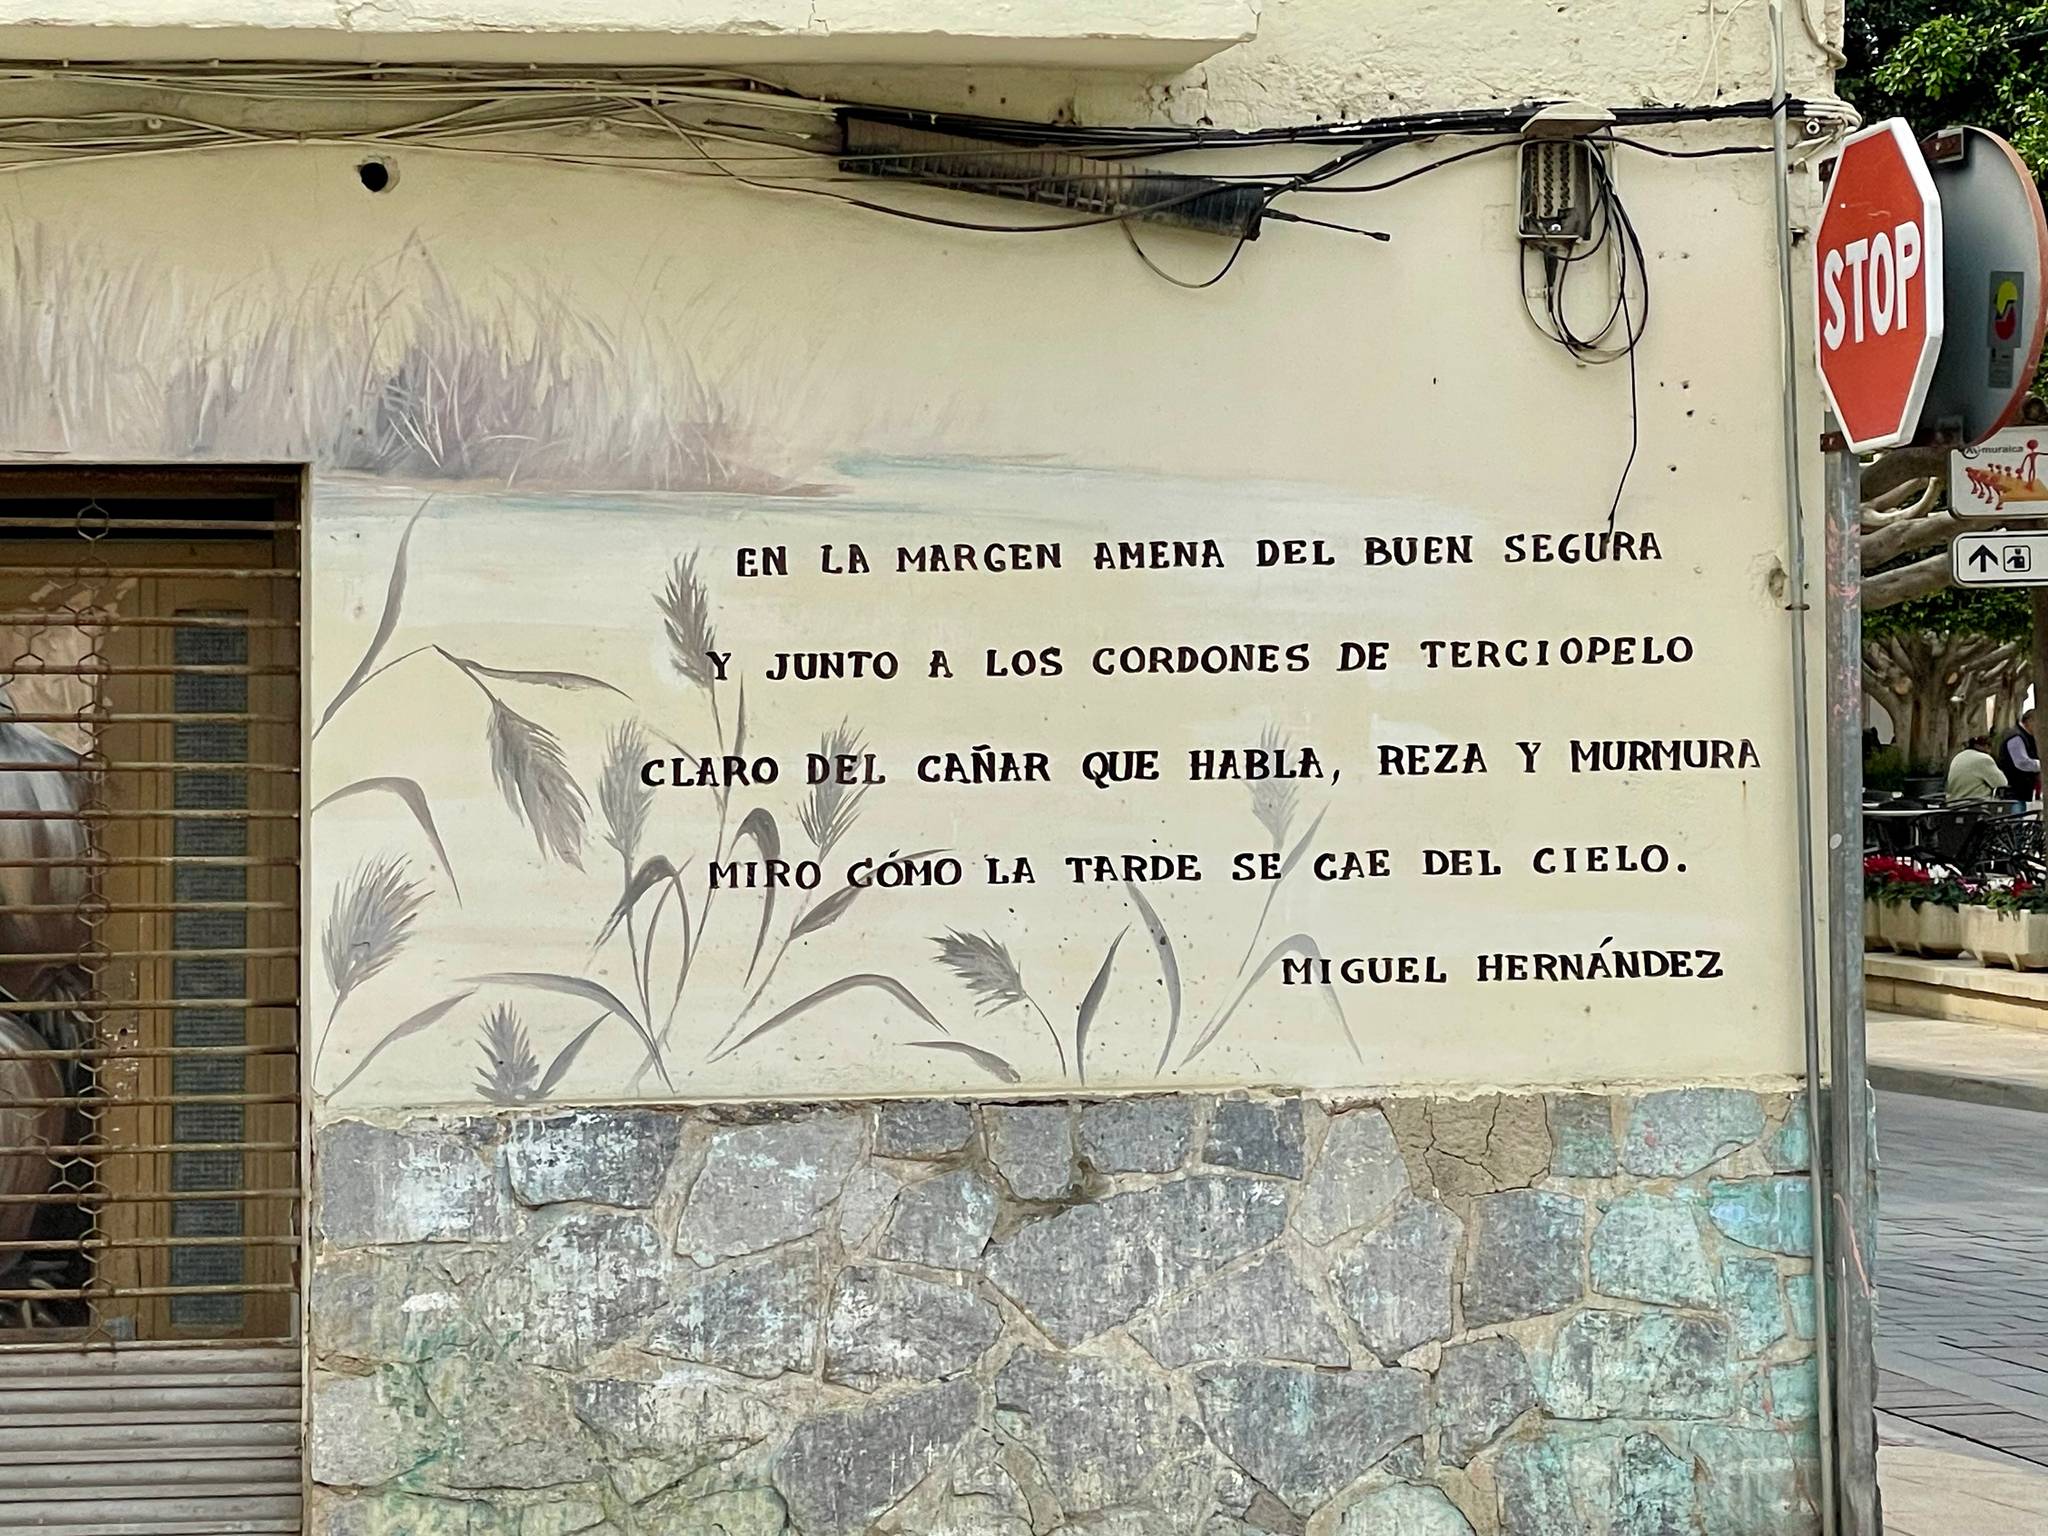 &mdash;Homage to the poet Miguel Hernández